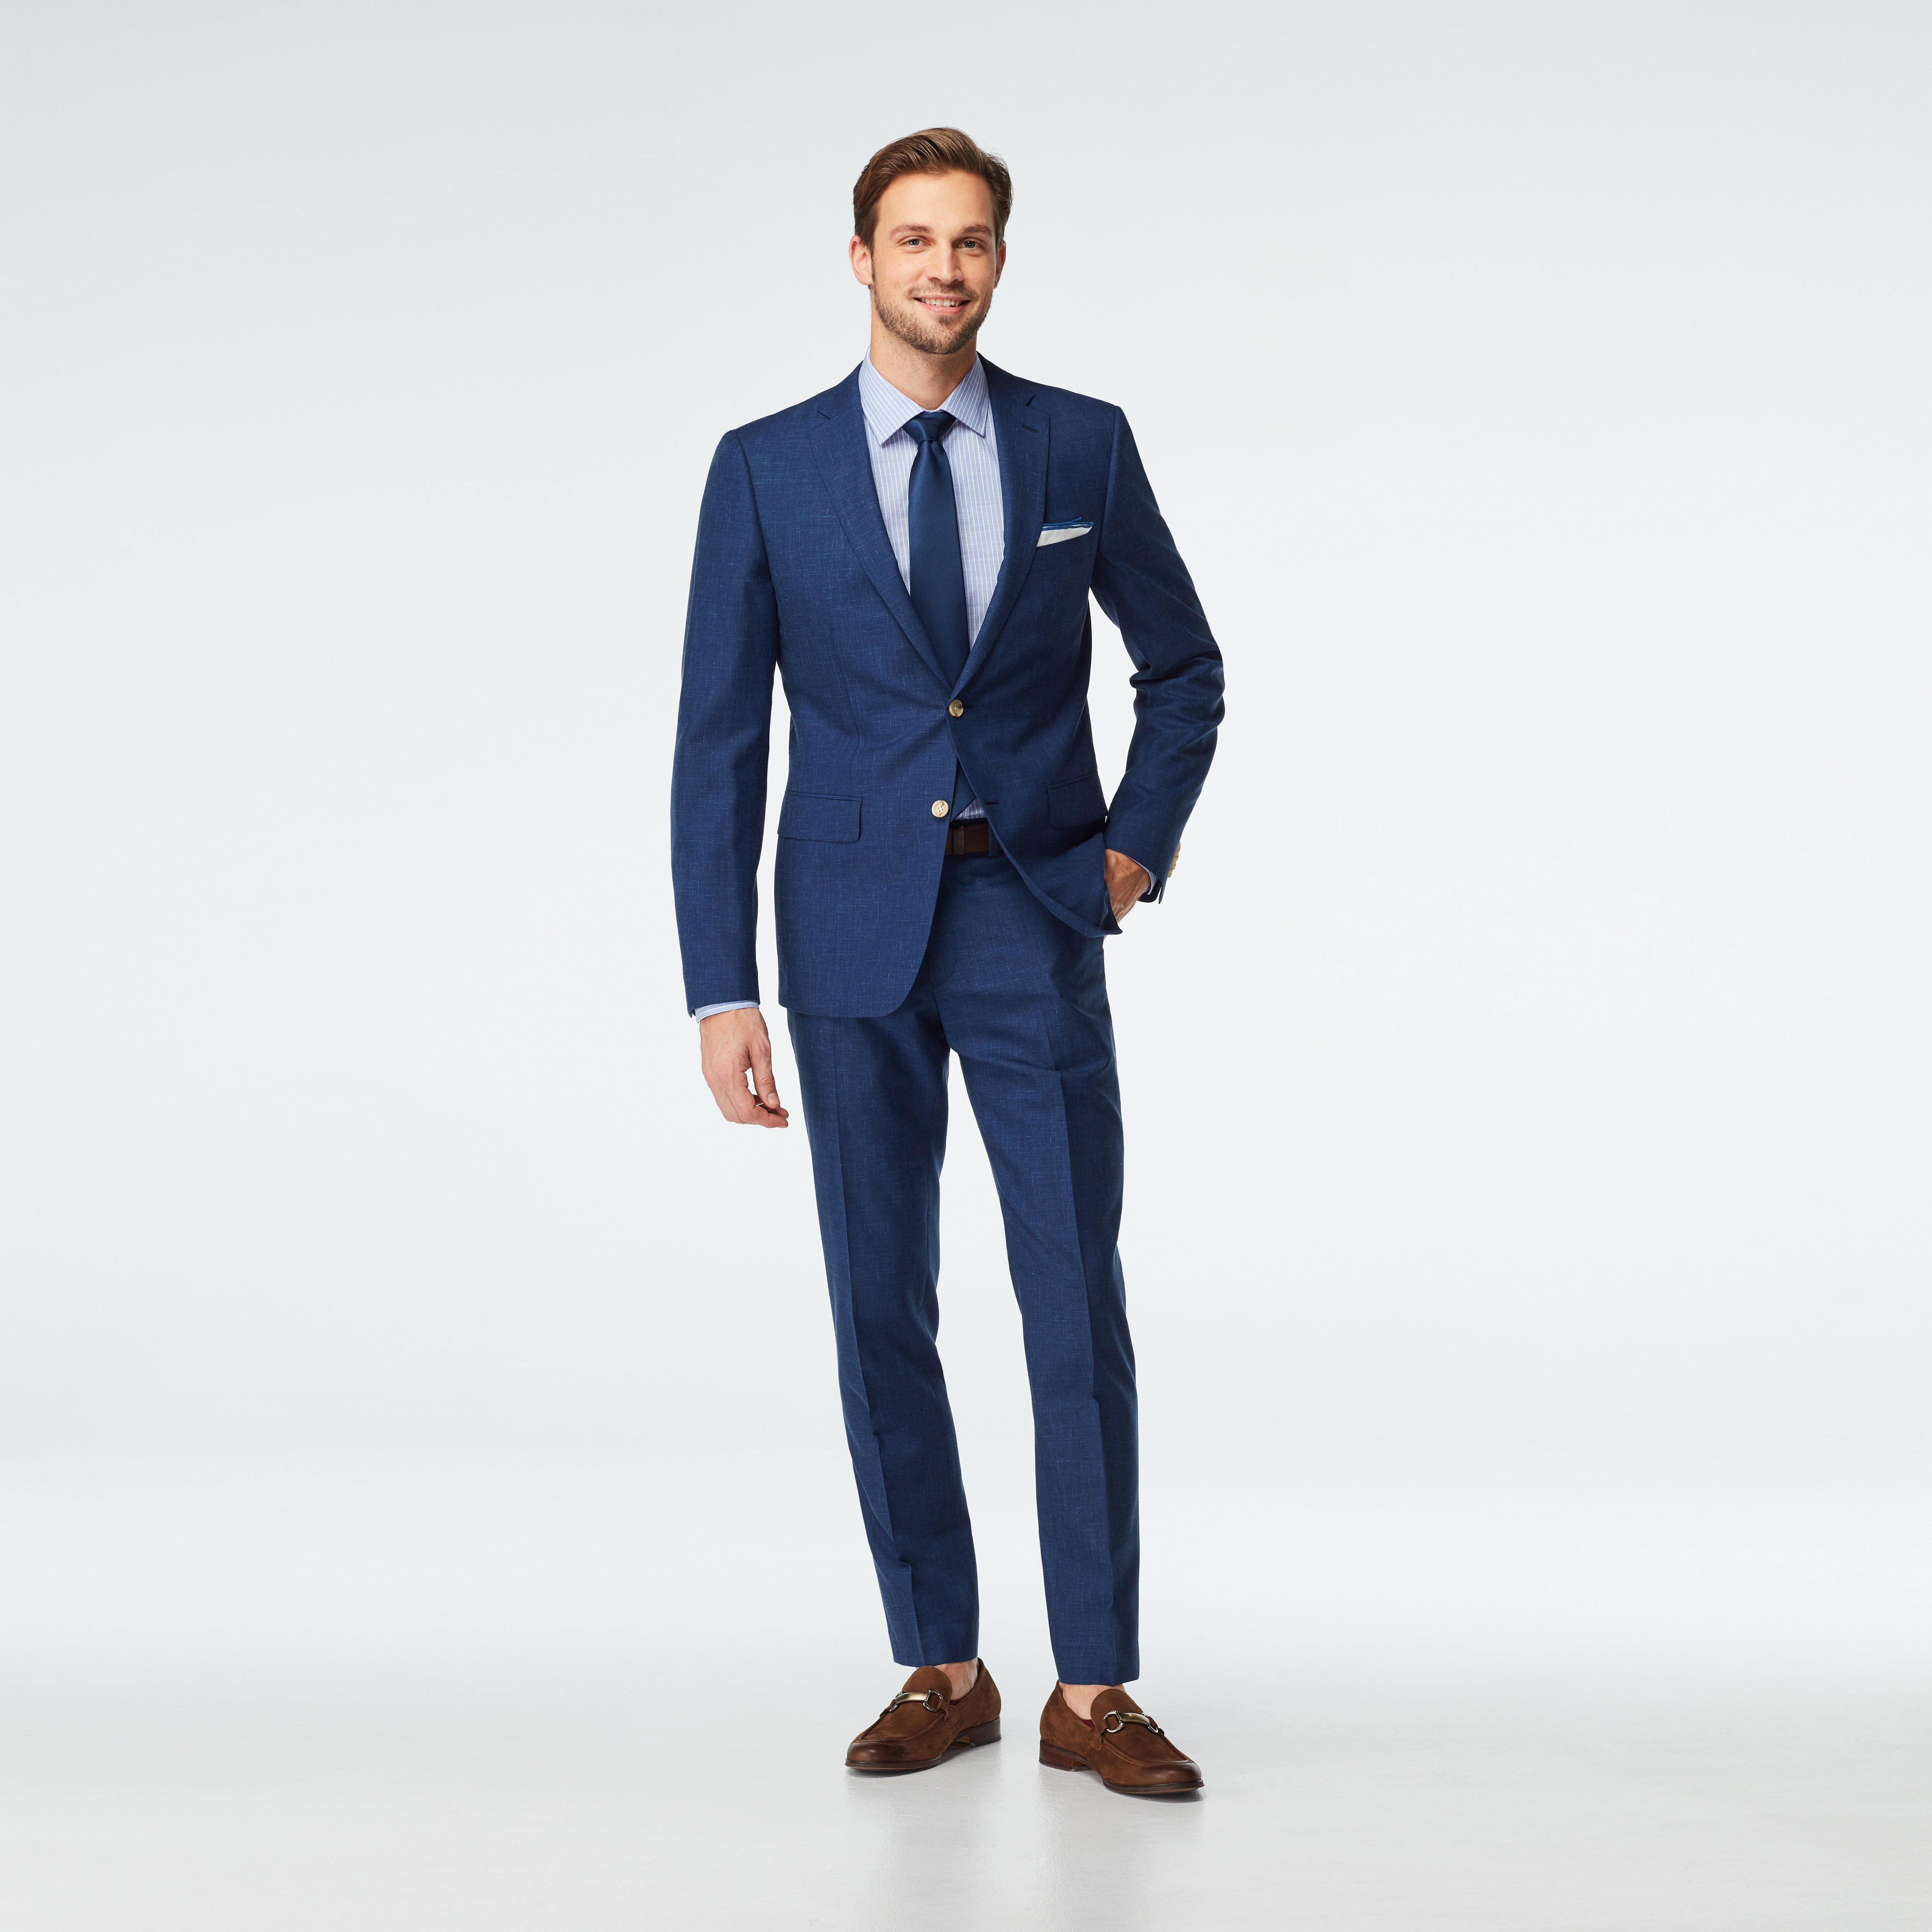 Stockport Wool Linen Blue Suit